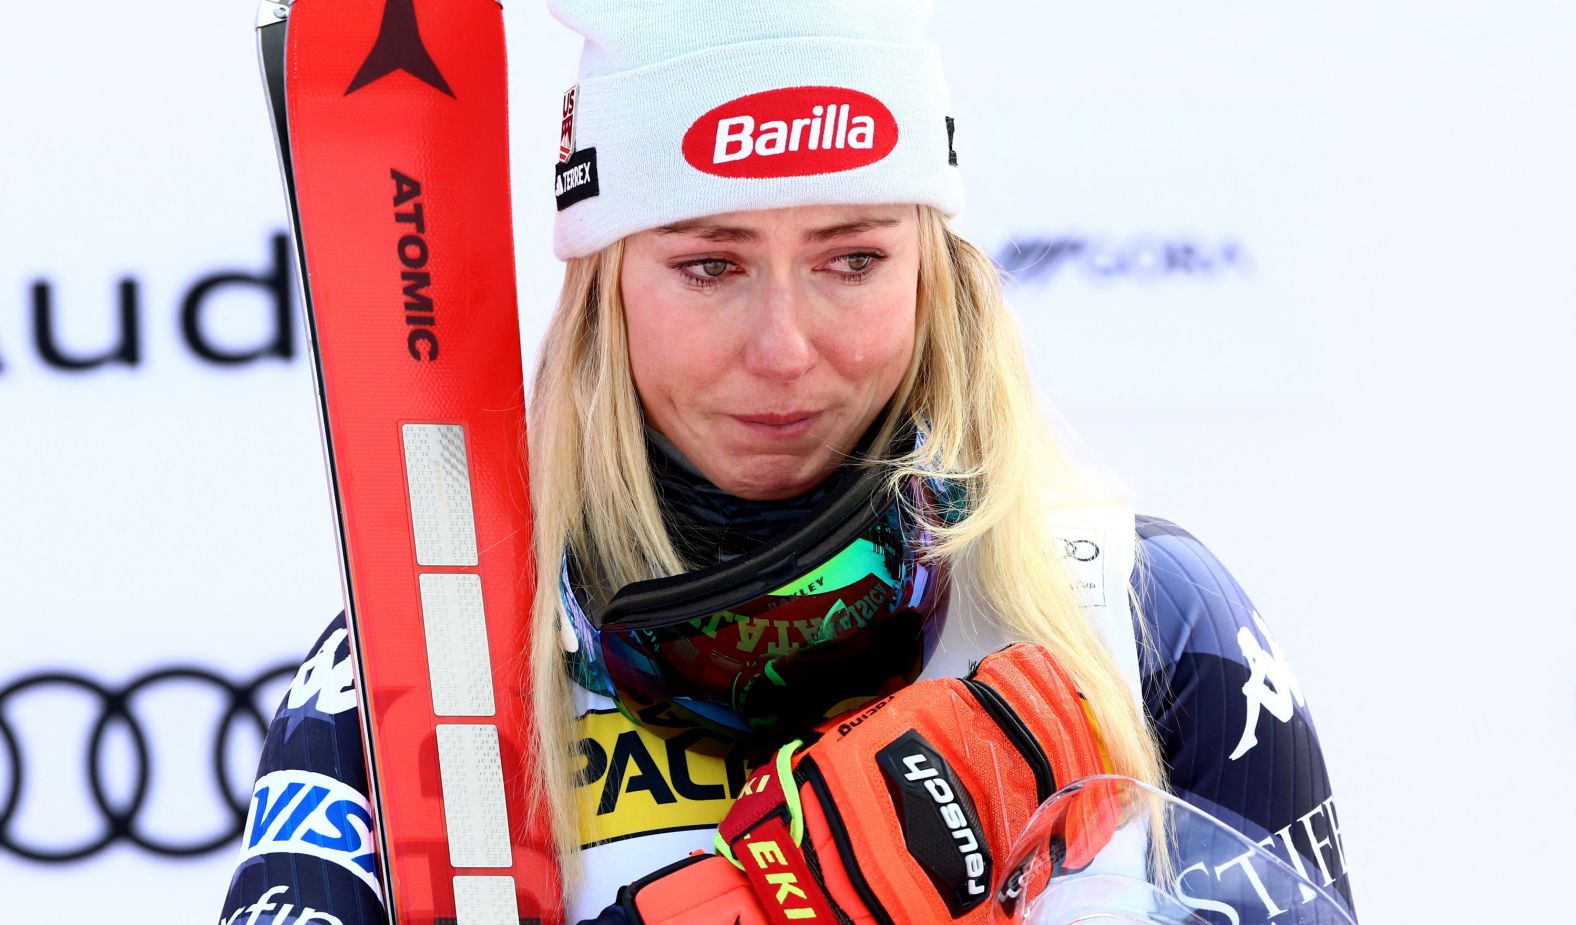 American skier Mikaela Shiffrin reacts on the podium after winning a World Cup giant slalom race in Kranjska Gora, Slovenia, on Sunday, January 8. <a href="index.php?page=&url=https%3A%2F%2Fwww.cnn.com%2F2023%2F01%2F08%2Fsport%2Fmikaela-shiffrin-lindsey-vonn-record-spt-intl%2Findex.html" target="_blank">Shiffrin tied Lindsey Vonn's record of 82 World Cup wins</a> — most by a female skier.